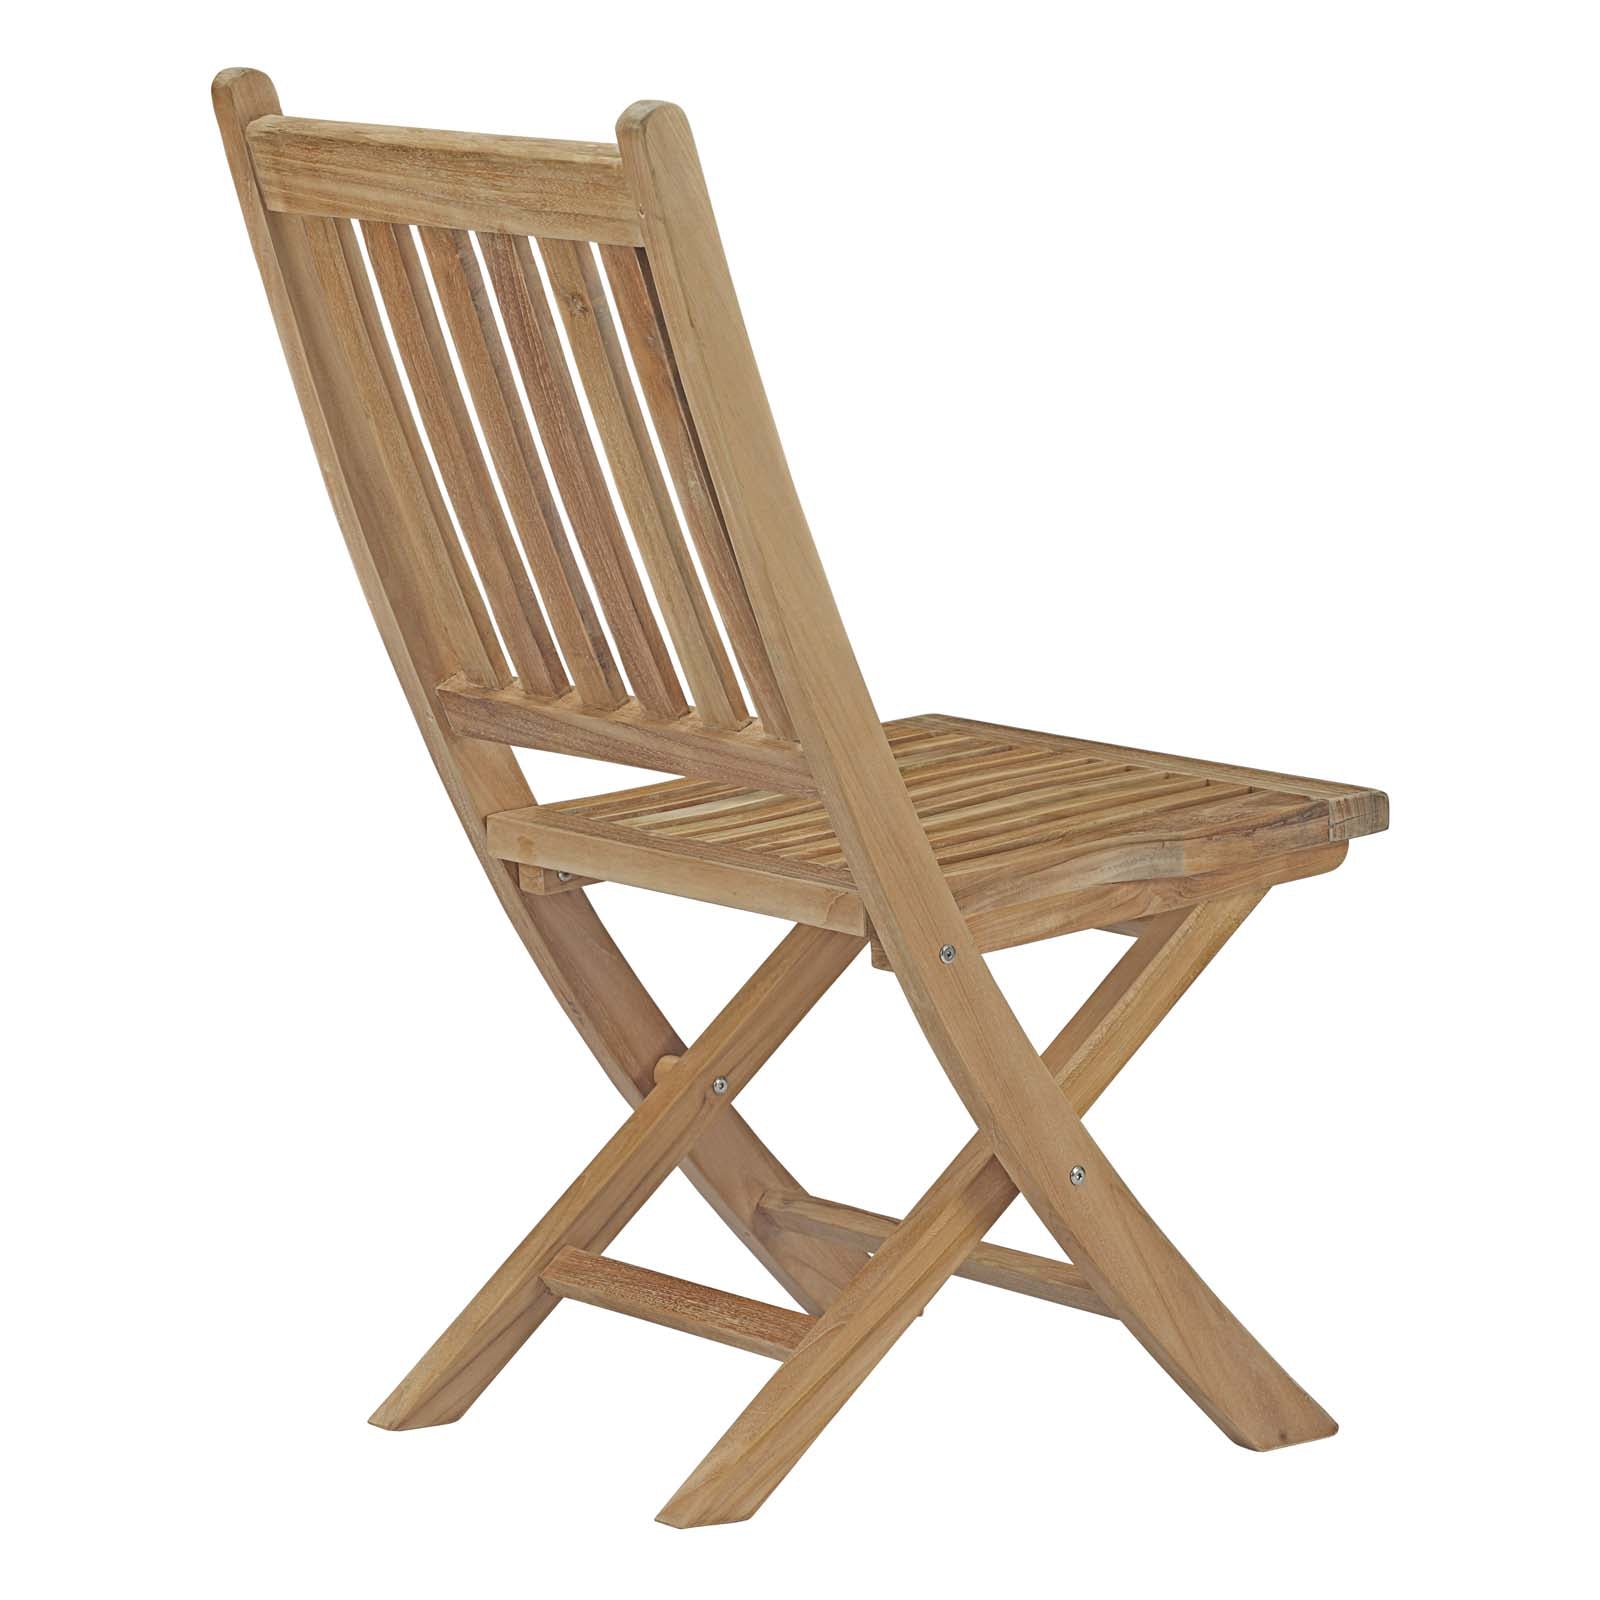 Marina Outdoor Patio Teak Folding Chair - East Shore Modern Home Furnishings